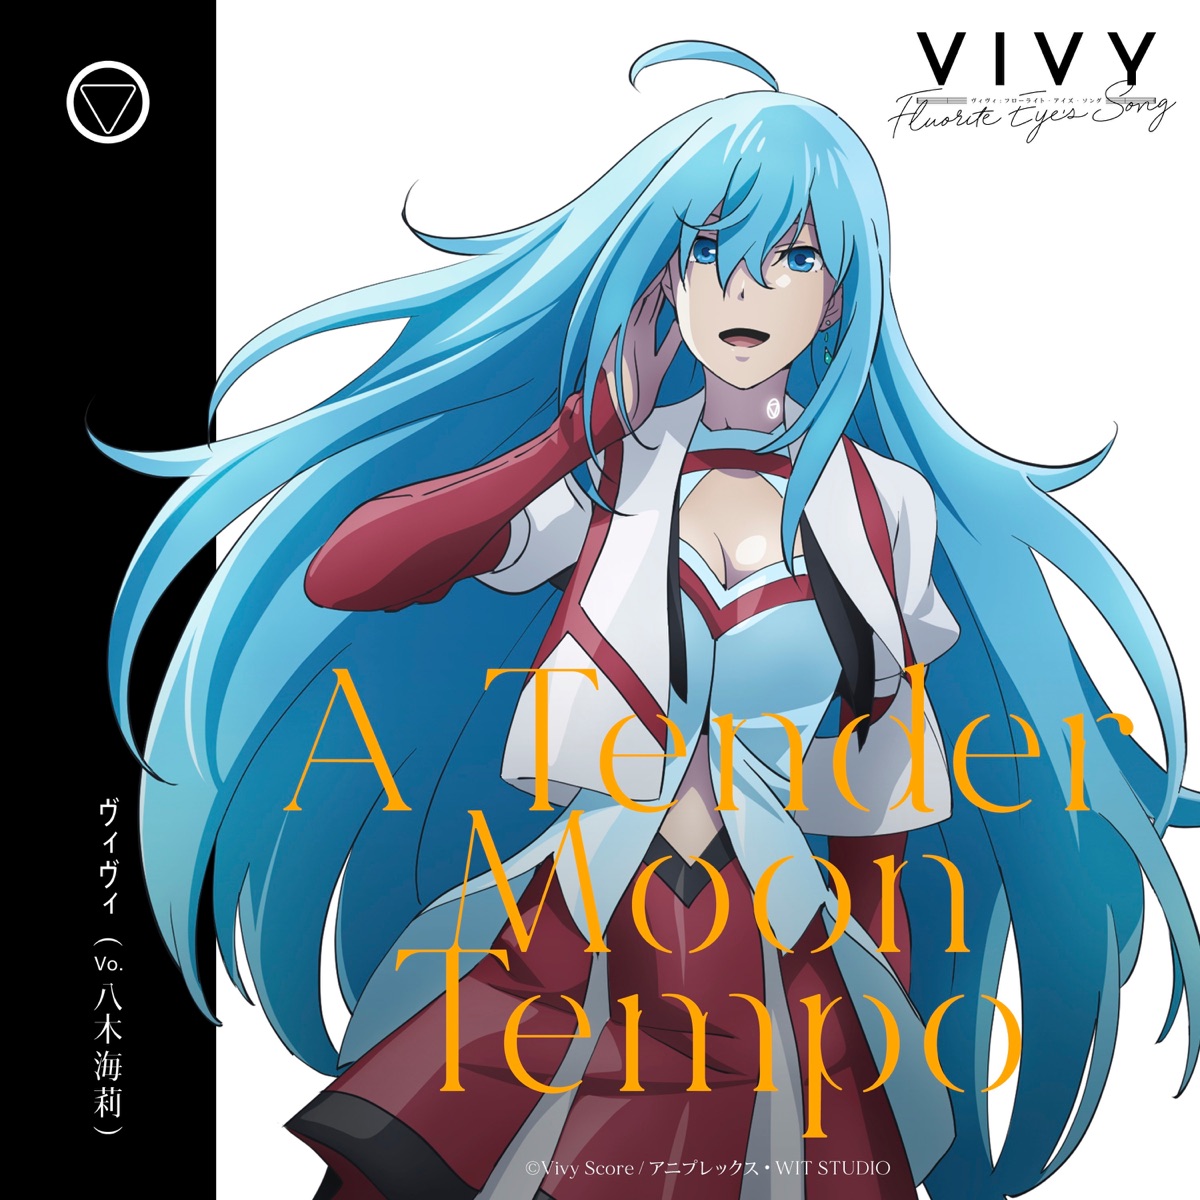 Cover for『Vivy (Kairi Yagi) - A Tender Moon Tempo』from the release『A Tender Moon Tempo』